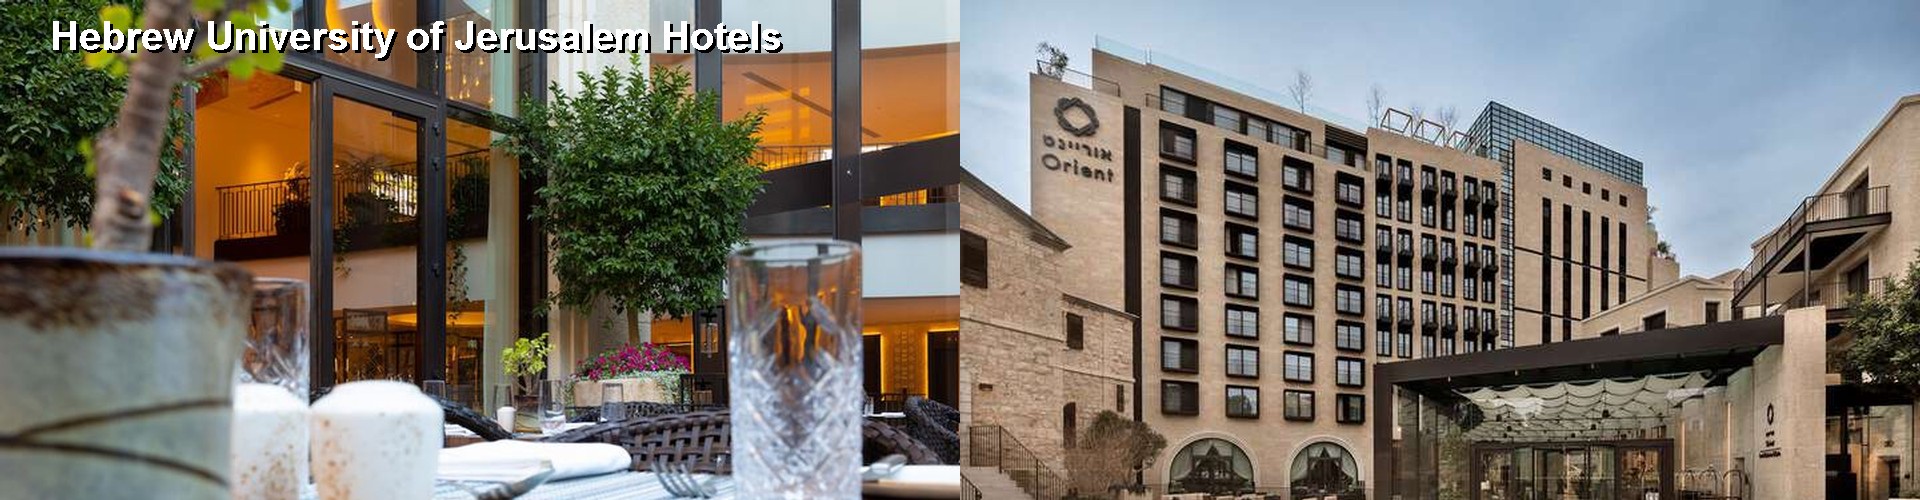 5 Best Hotels near Hebrew University of Jerusalem